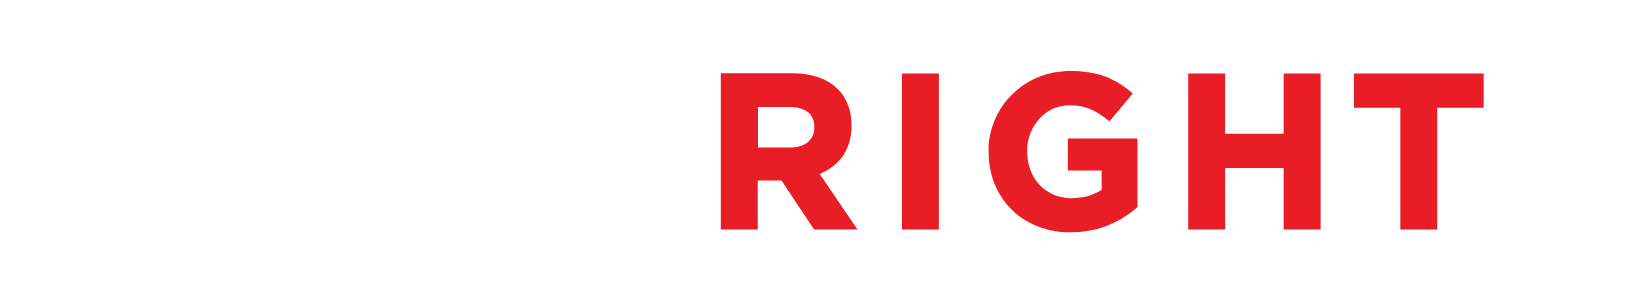 HireRight Logo groß für dunkle Hintergründe (transparentes PNG)